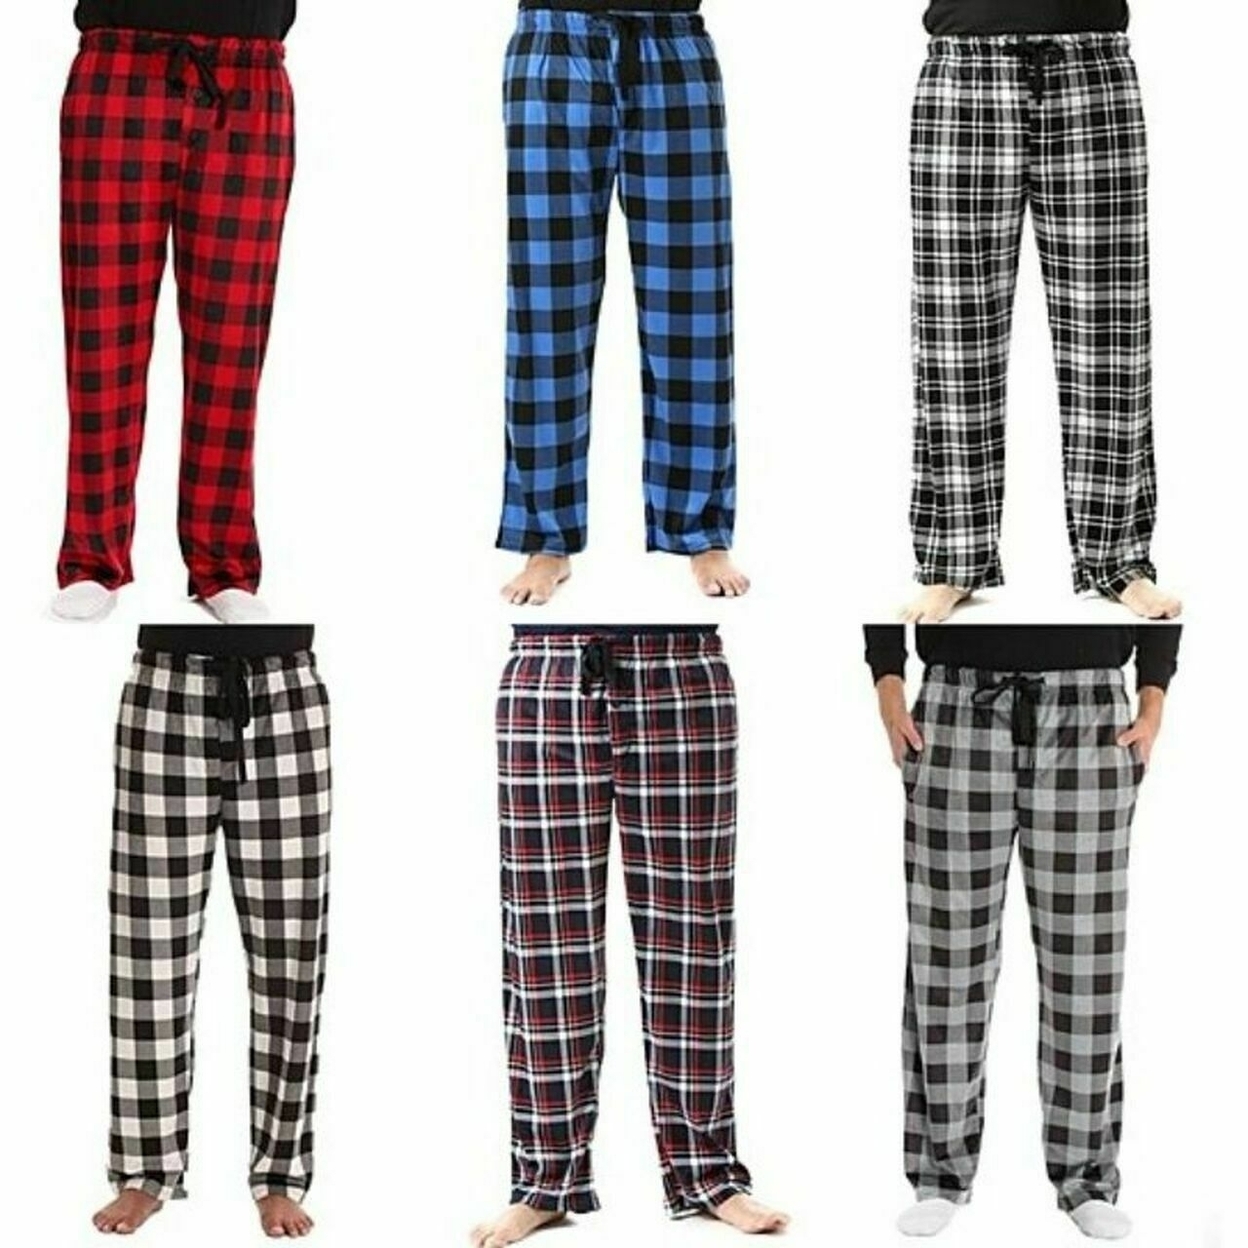 2-Pack: Men's Ultra Soft Cozy Flannel Fleece Plaid Pajama Sleep Bottom Lounge Pants - Red & Blue, Large